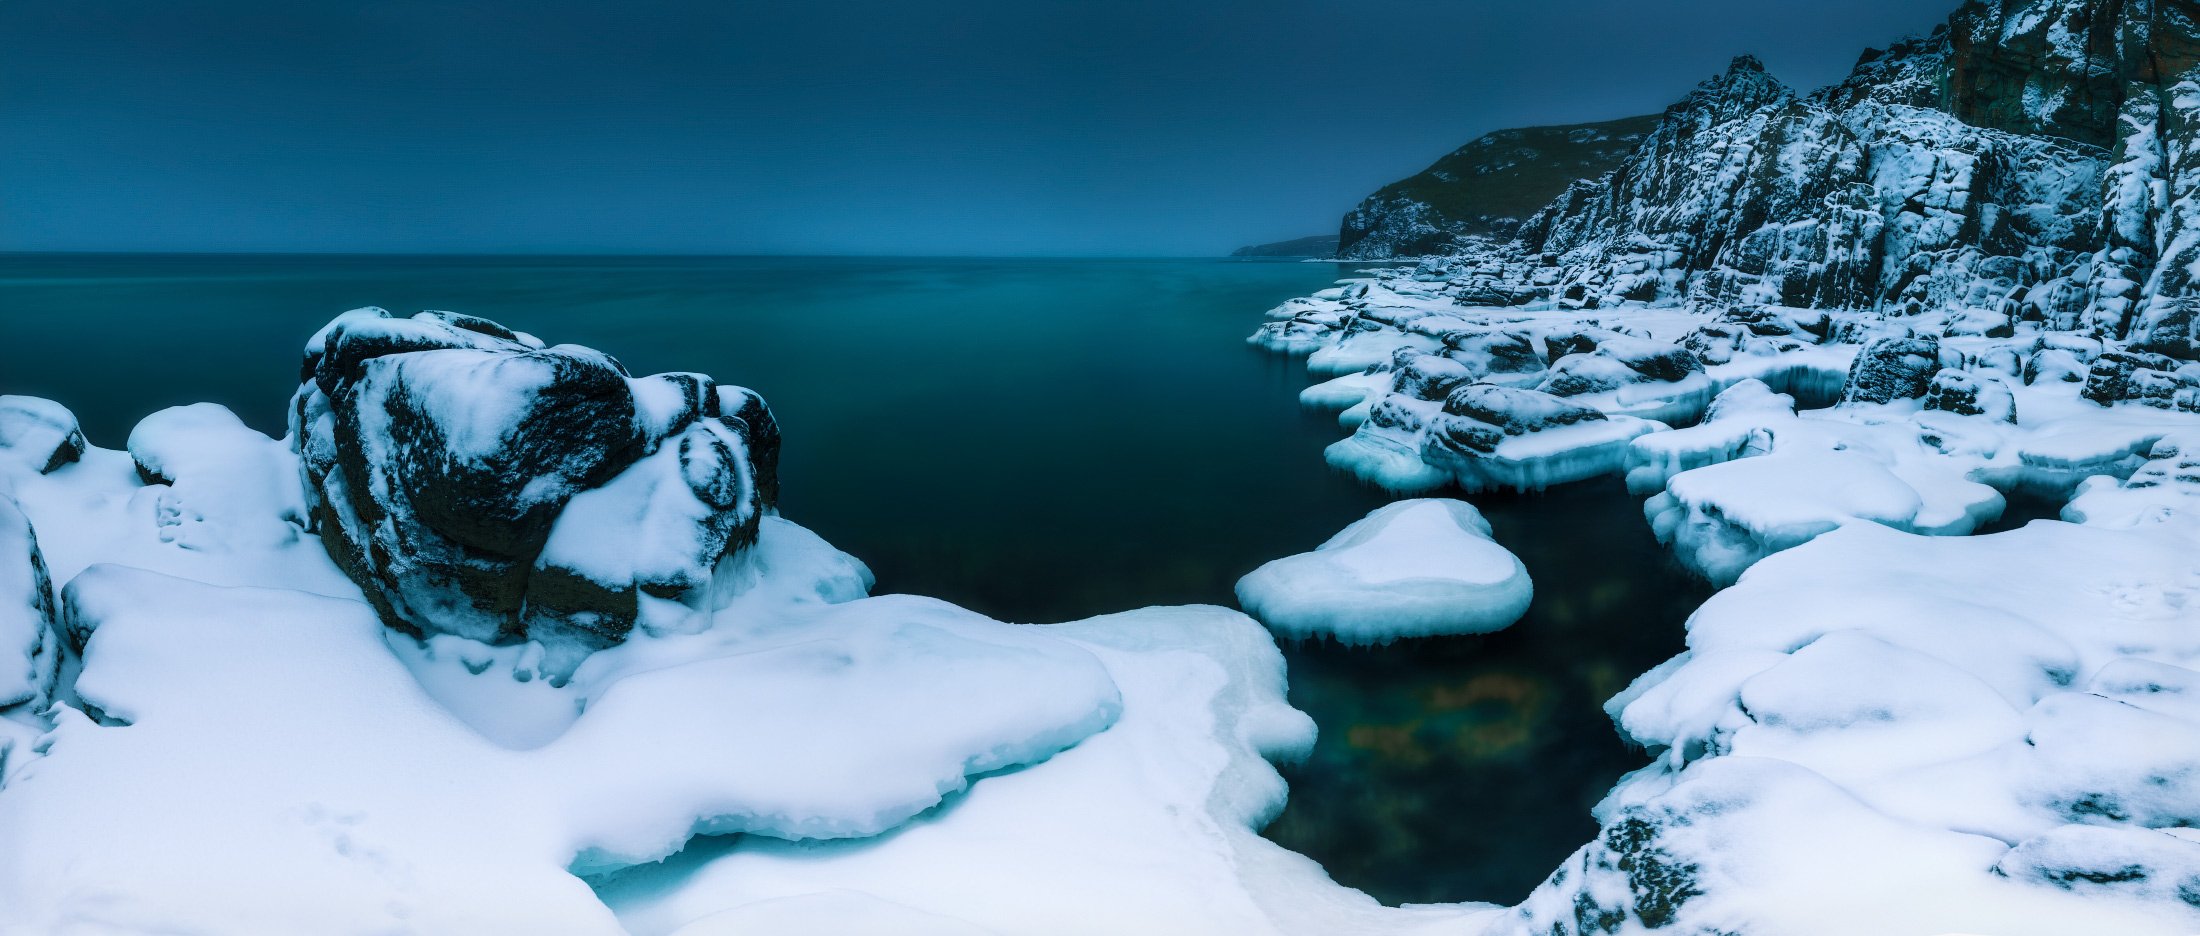 панорама, зима, море, лёд, снег, Андрей Кровлин